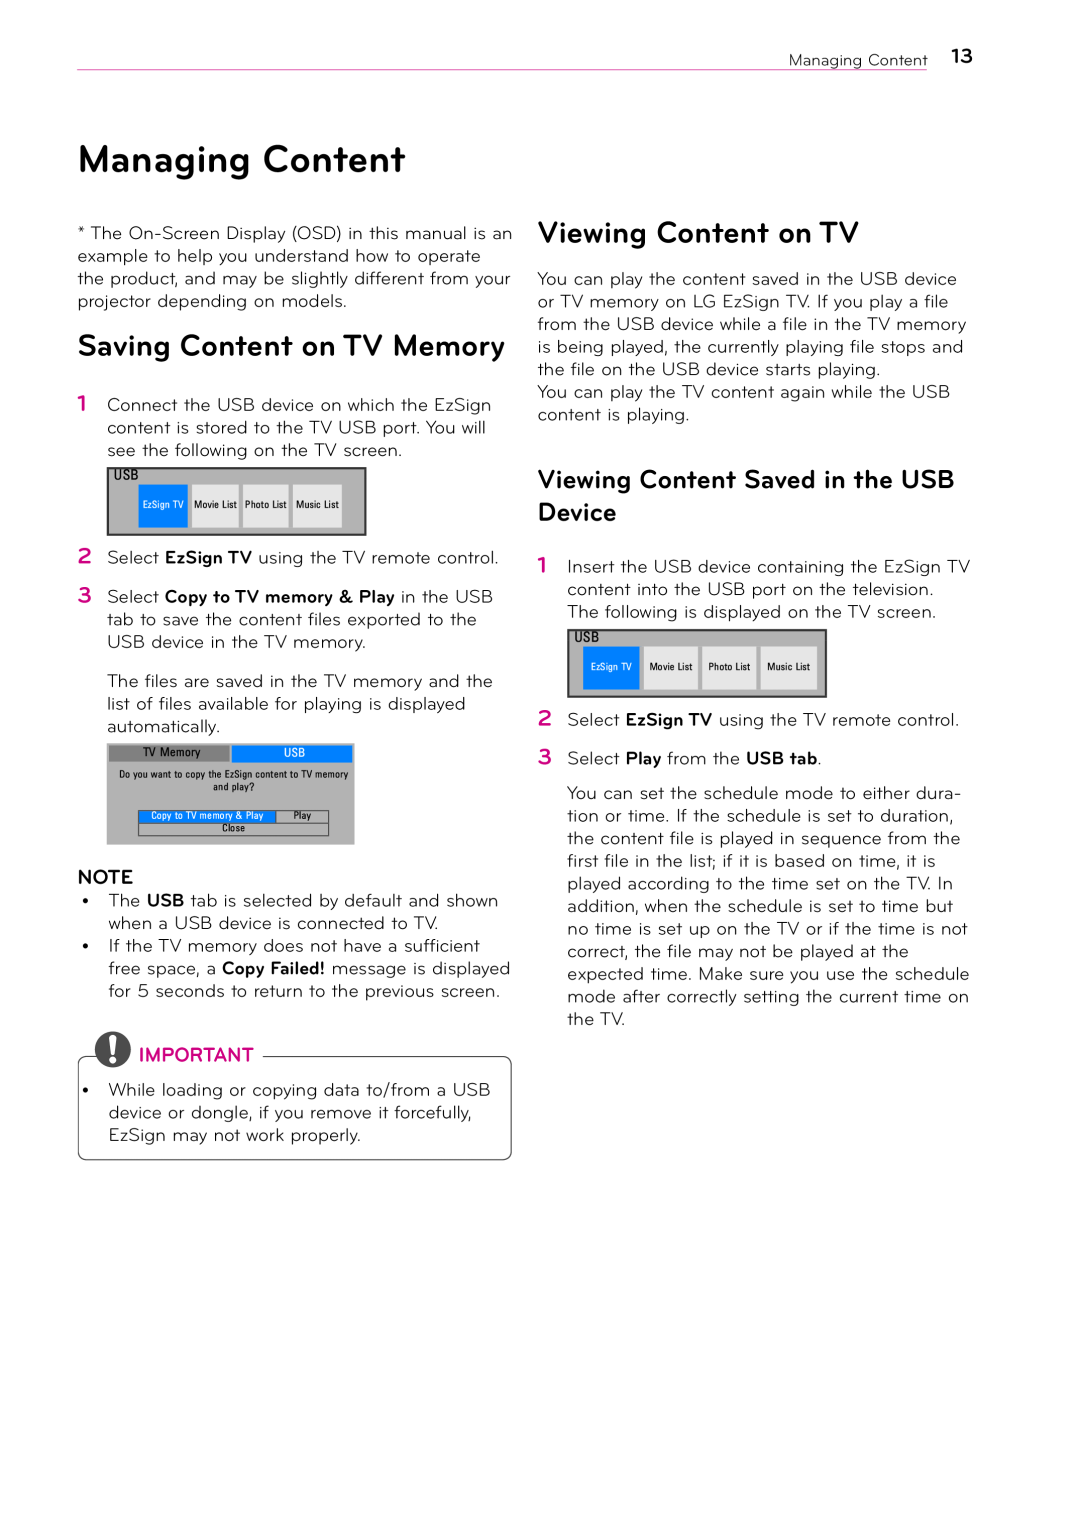 LG Electronics 2 manual Managing Content, Saving Content on TV Memory, Viewing Content on TV 